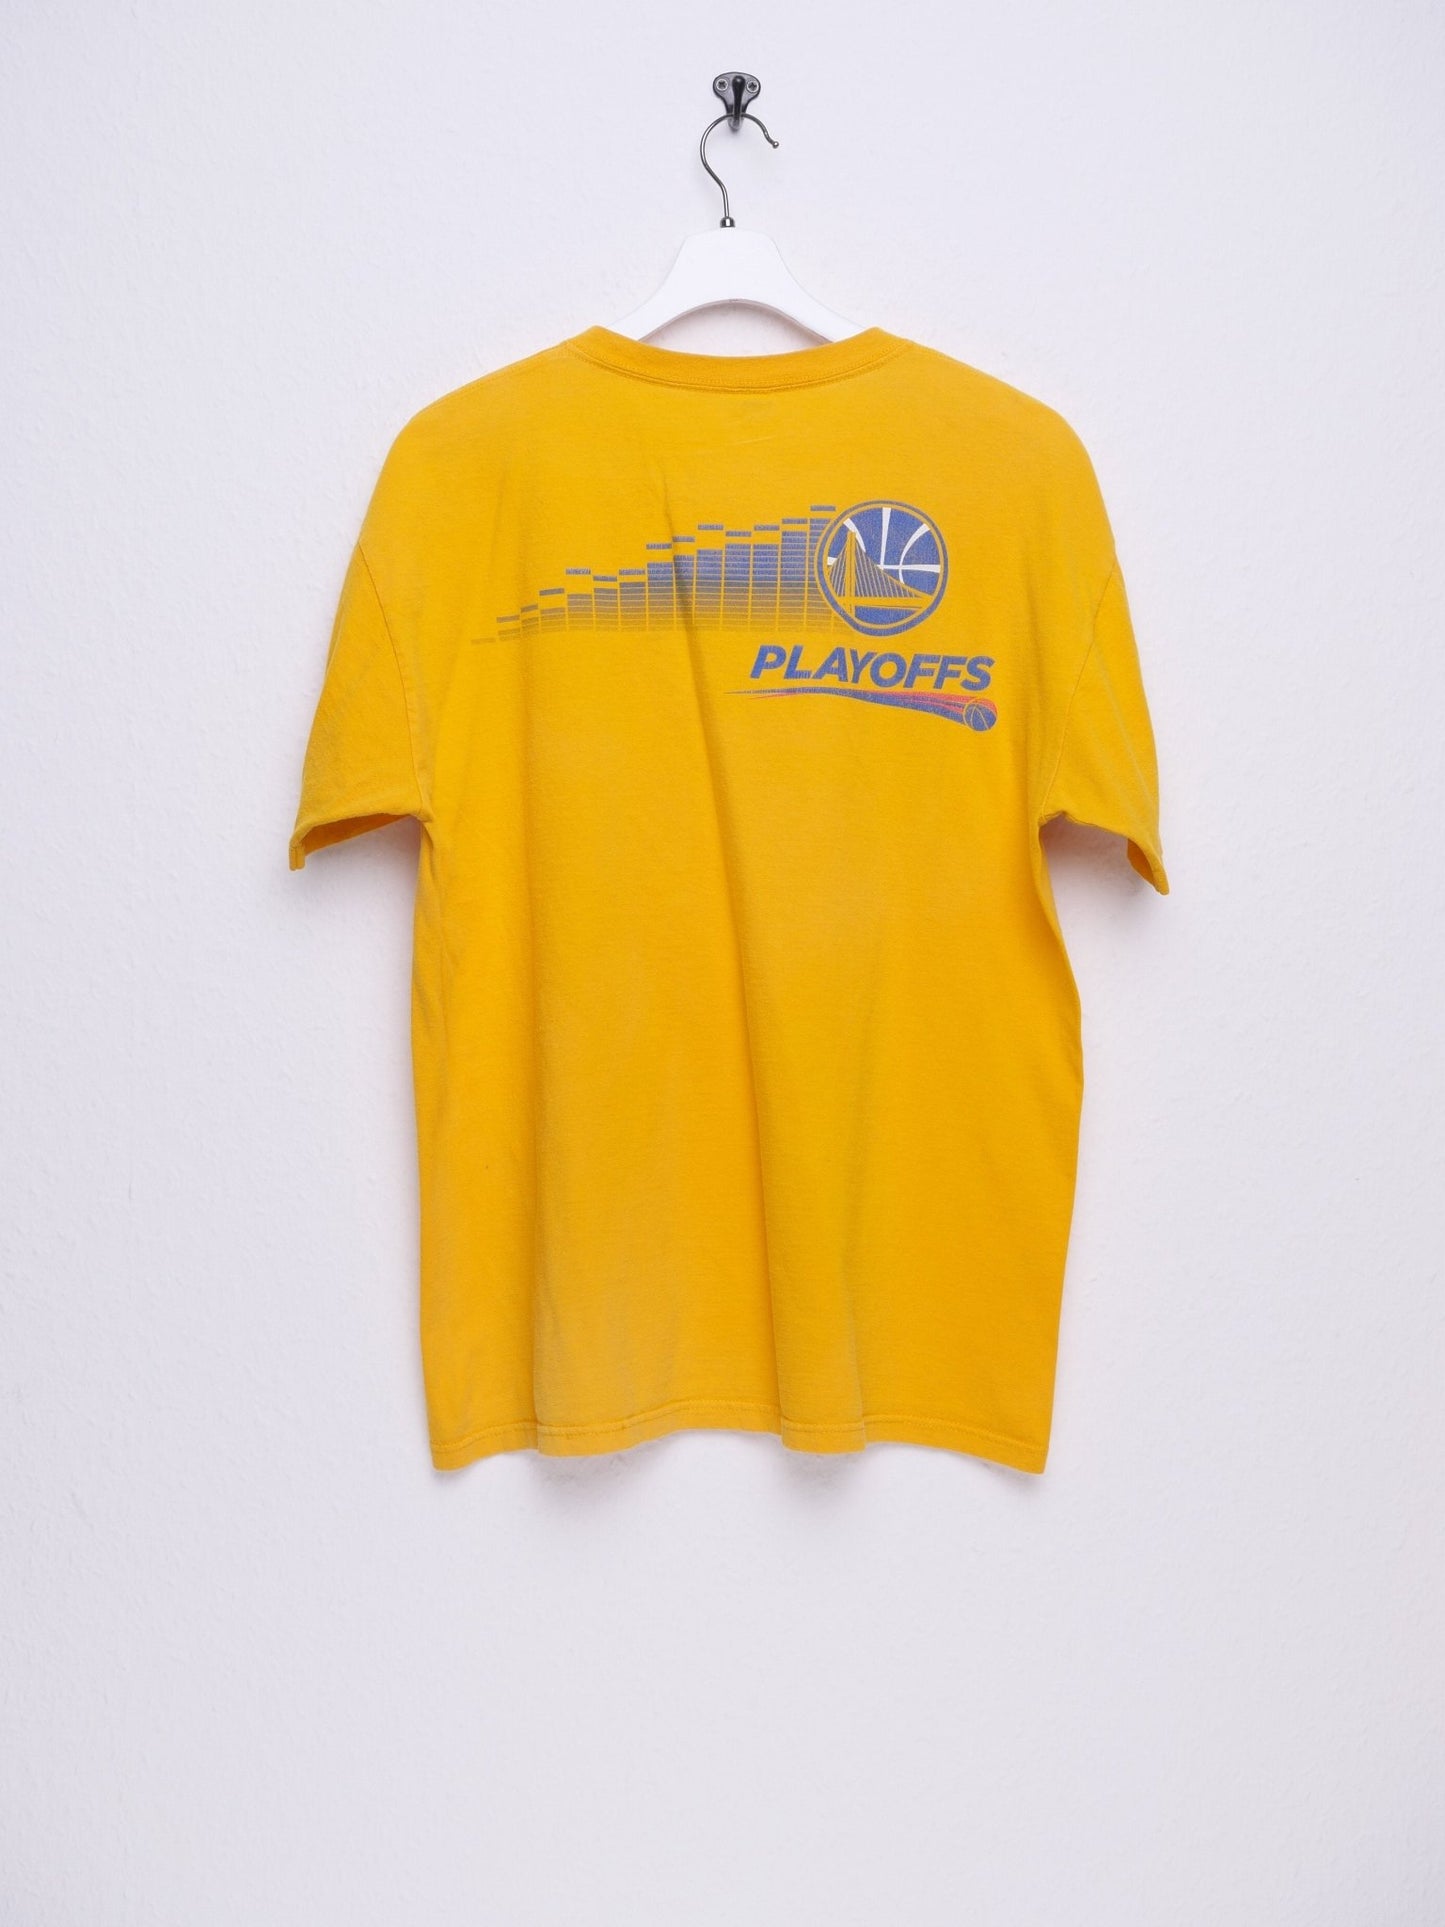 jerzees Basketball Playoffs 2014 printed Spellout yellow Shirt - Peeces